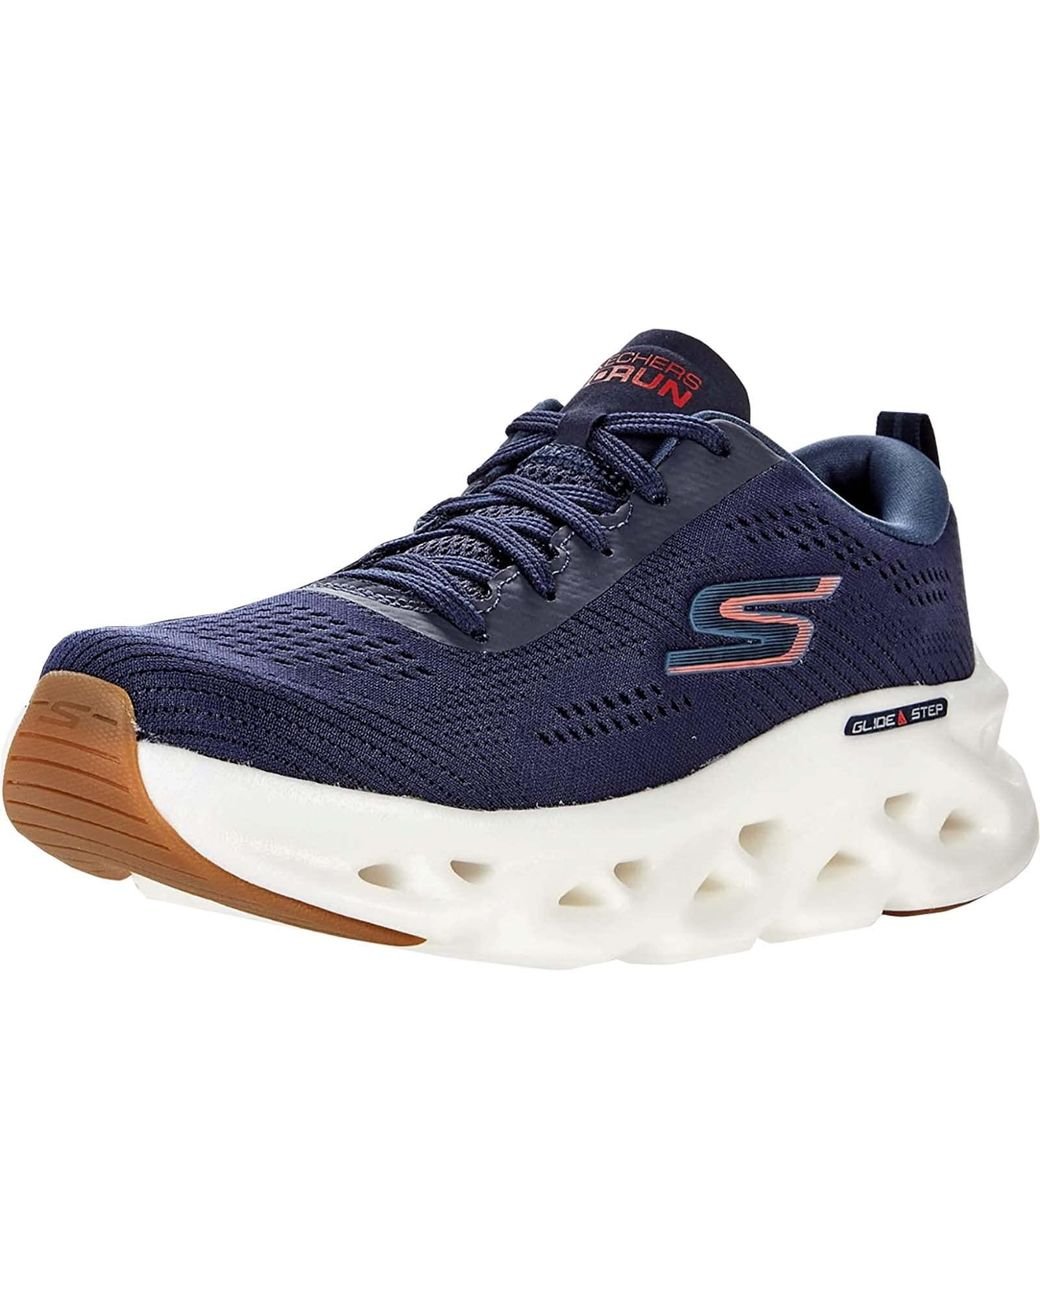 Skechers Gorun Glide-step Swirl Tech-max Cushioning Athletic Workout  Running Walking Shoes Sneaker in Blue for Men | Lyst